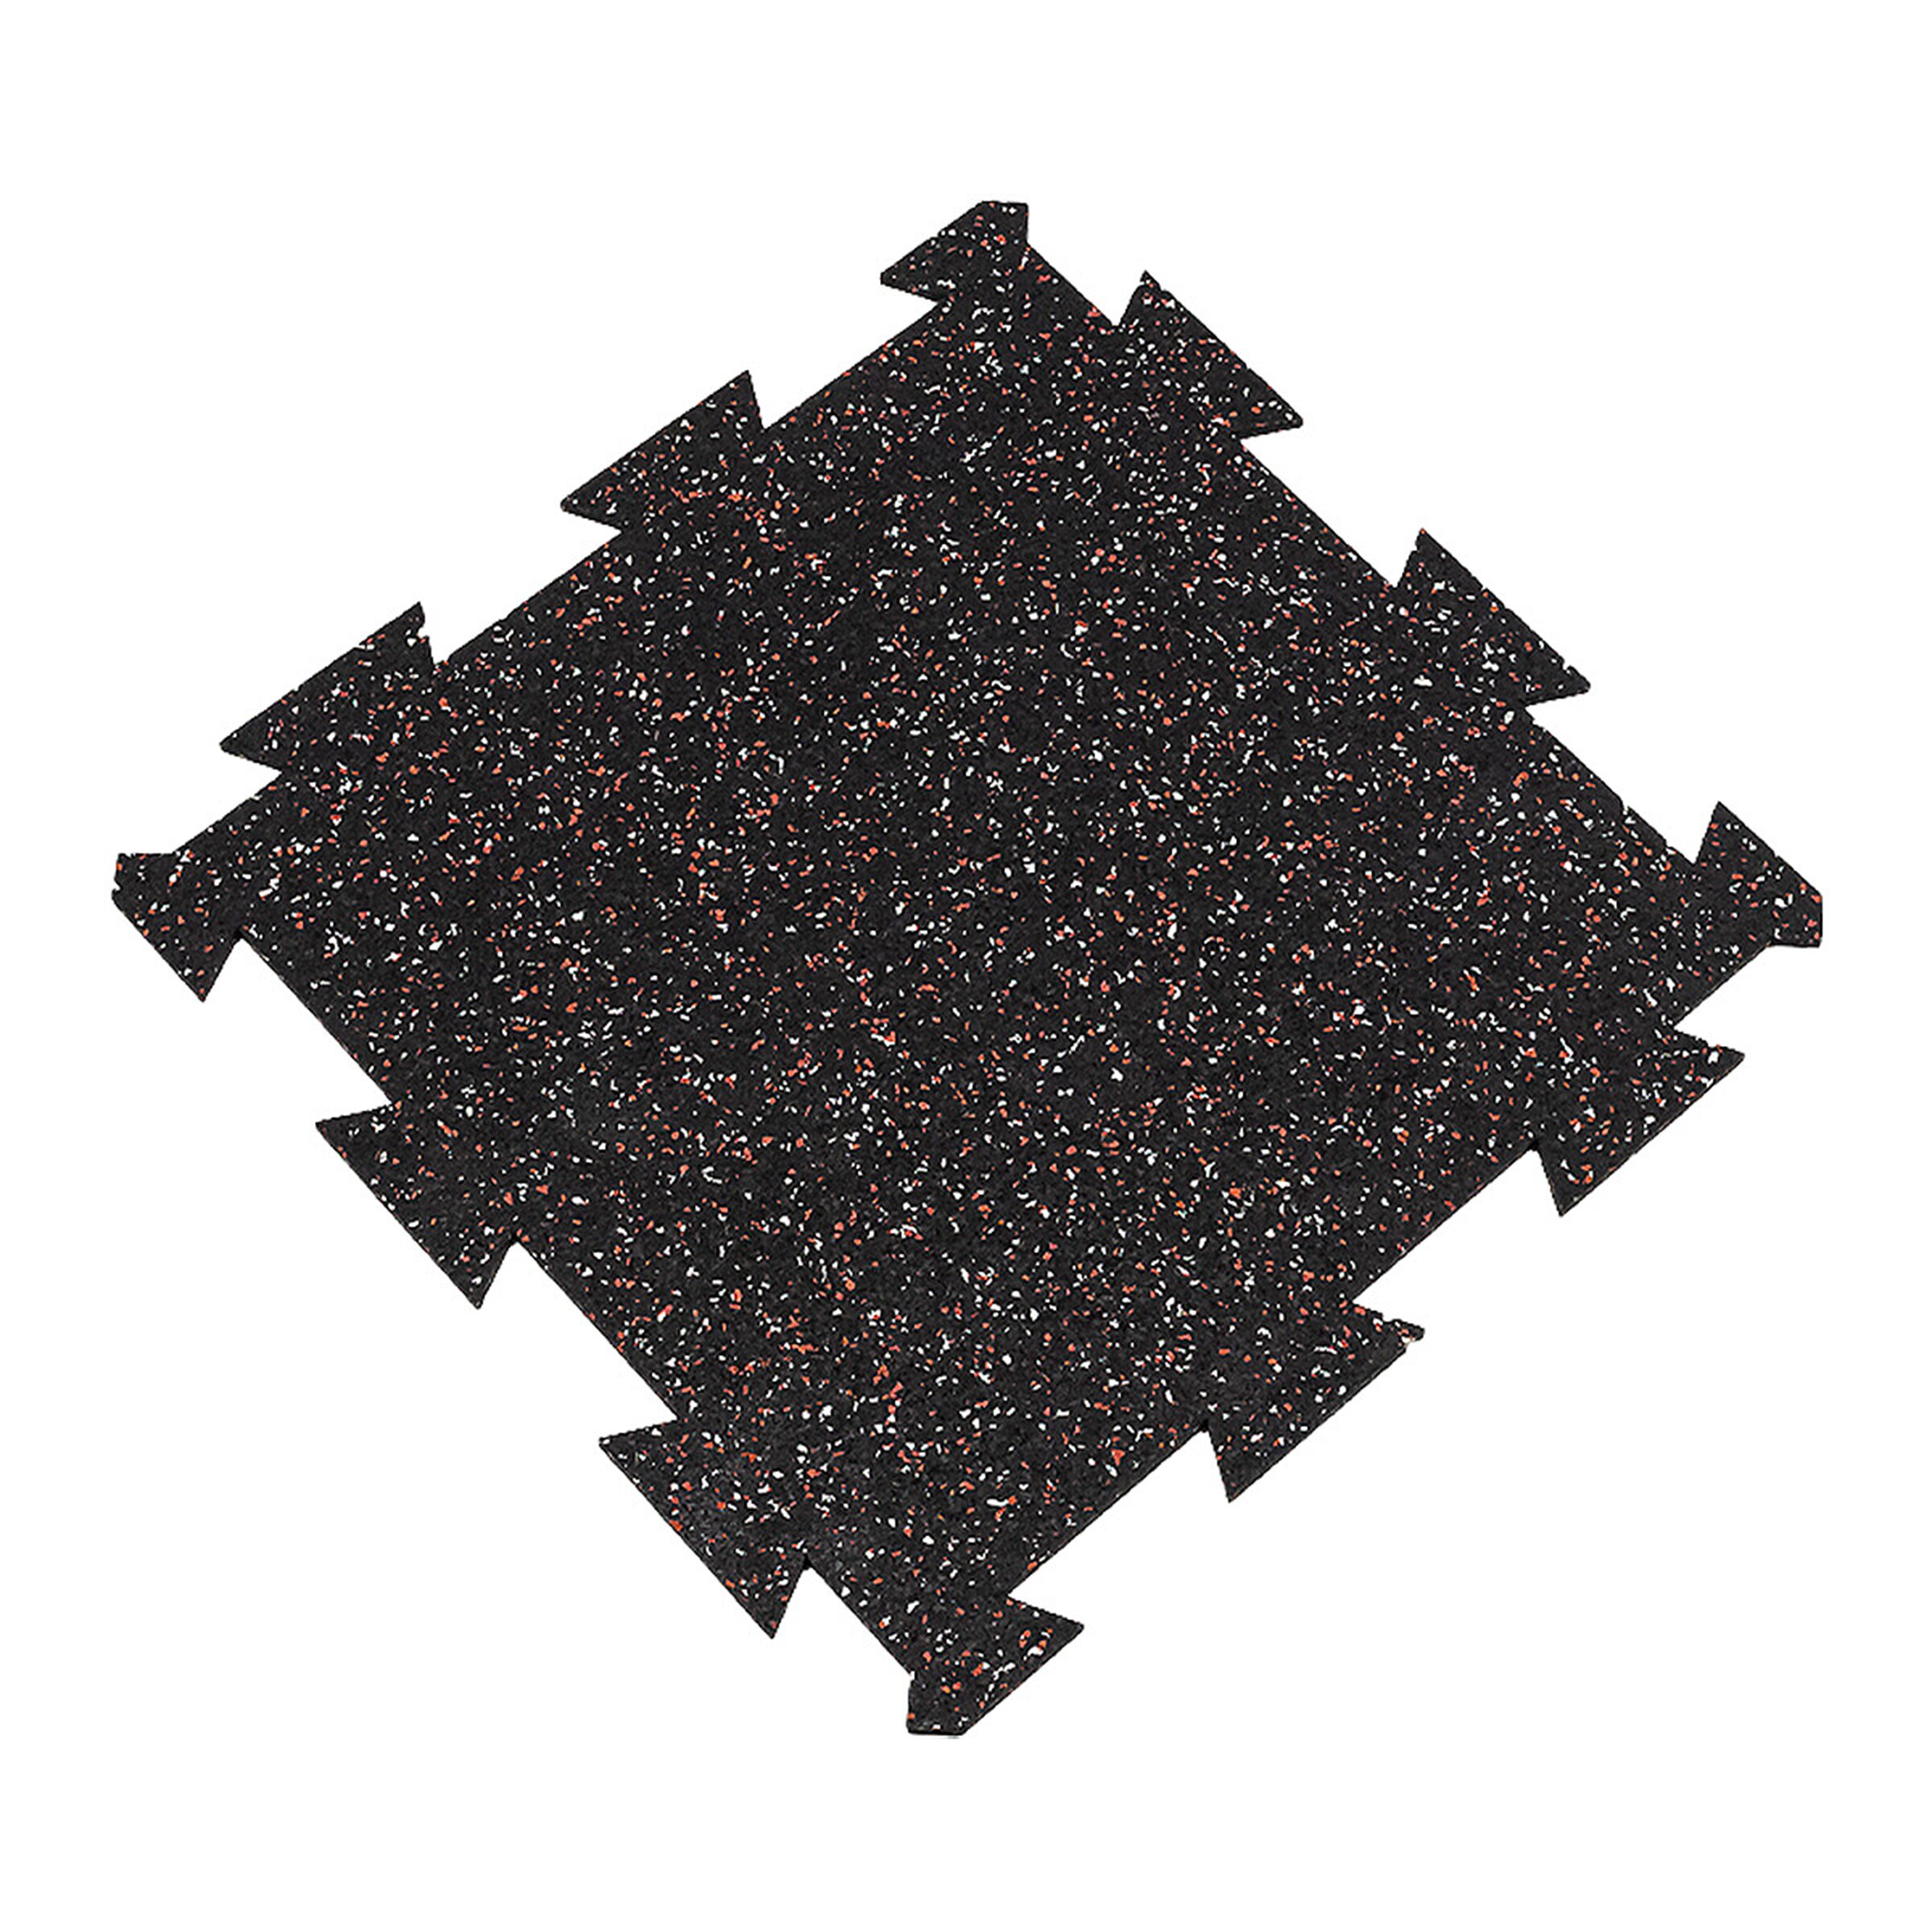 Černo-bílo-červená gumová puzzle modulová dlaždice (střed) FLOMA SF1050 FitFlo - délka 50 cm, šířka 50 cm, výška 0,8 cm